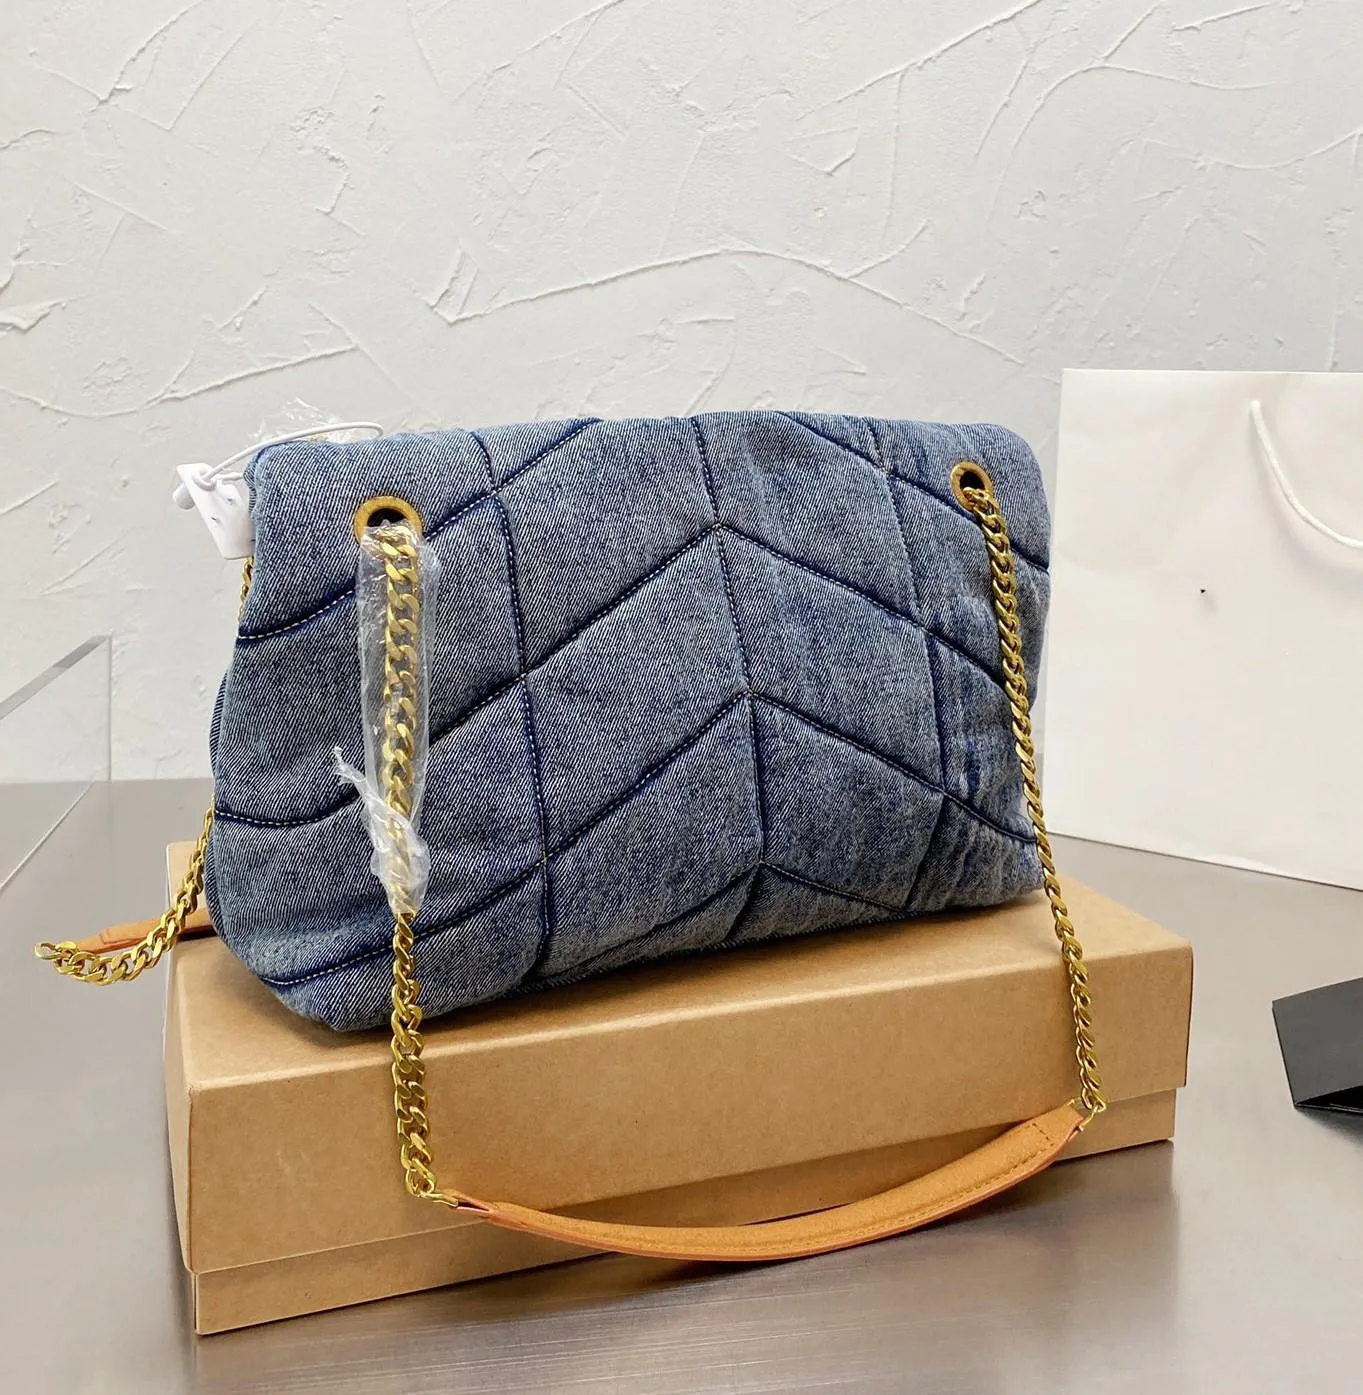 Acrylic Fashionable Golden Single Shoulder Crossbody Bag For Women Leopard  Print Tote Bag Large Capacity Handbag Women'S Shoulder Bag For Commuter  Shopping , Pefect Best Funny Novelty & Gag Gifts